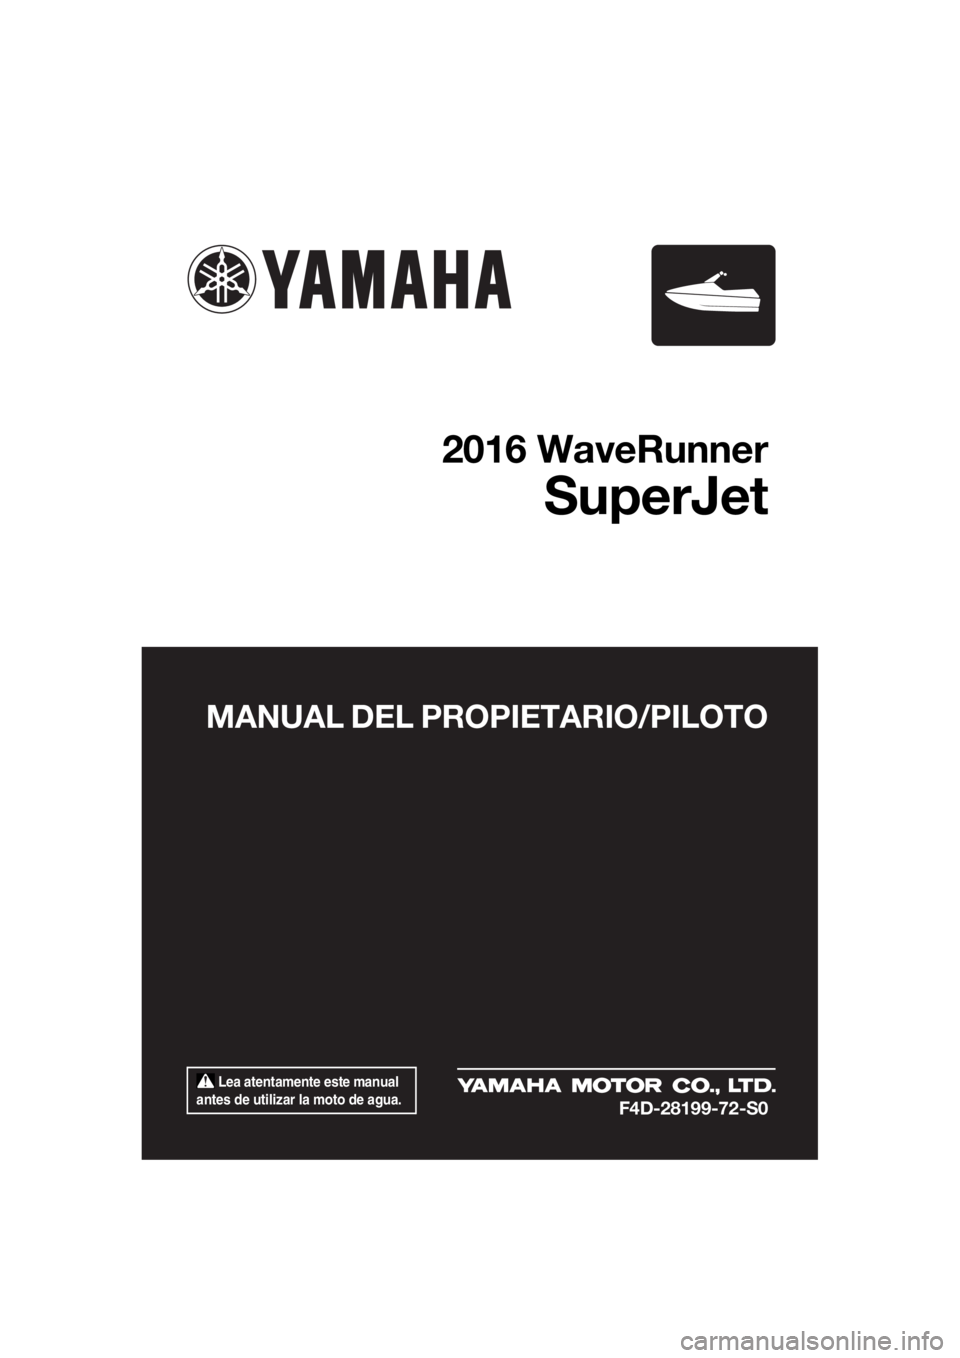 YAMAHA SUPERJET 2016  Manuale de Empleo (in Spanish) 